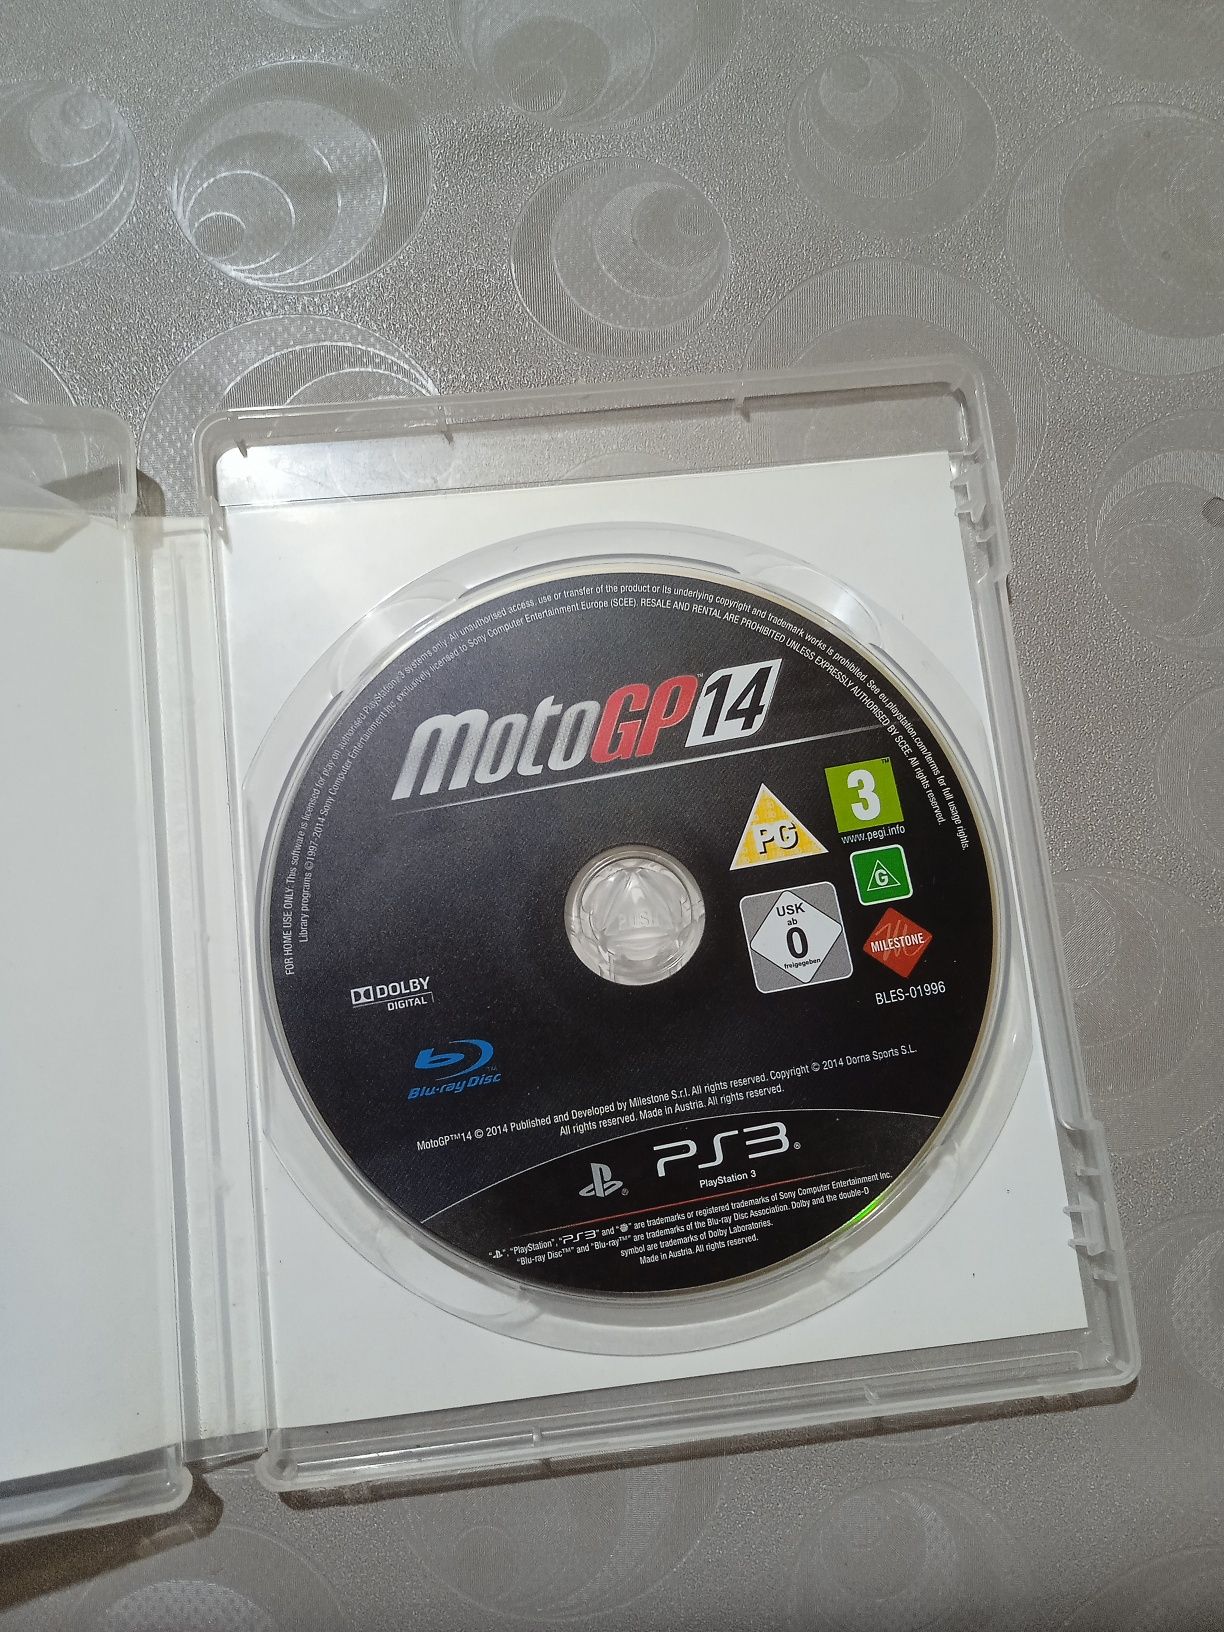 Jogos de PS 3 Moto GP 14